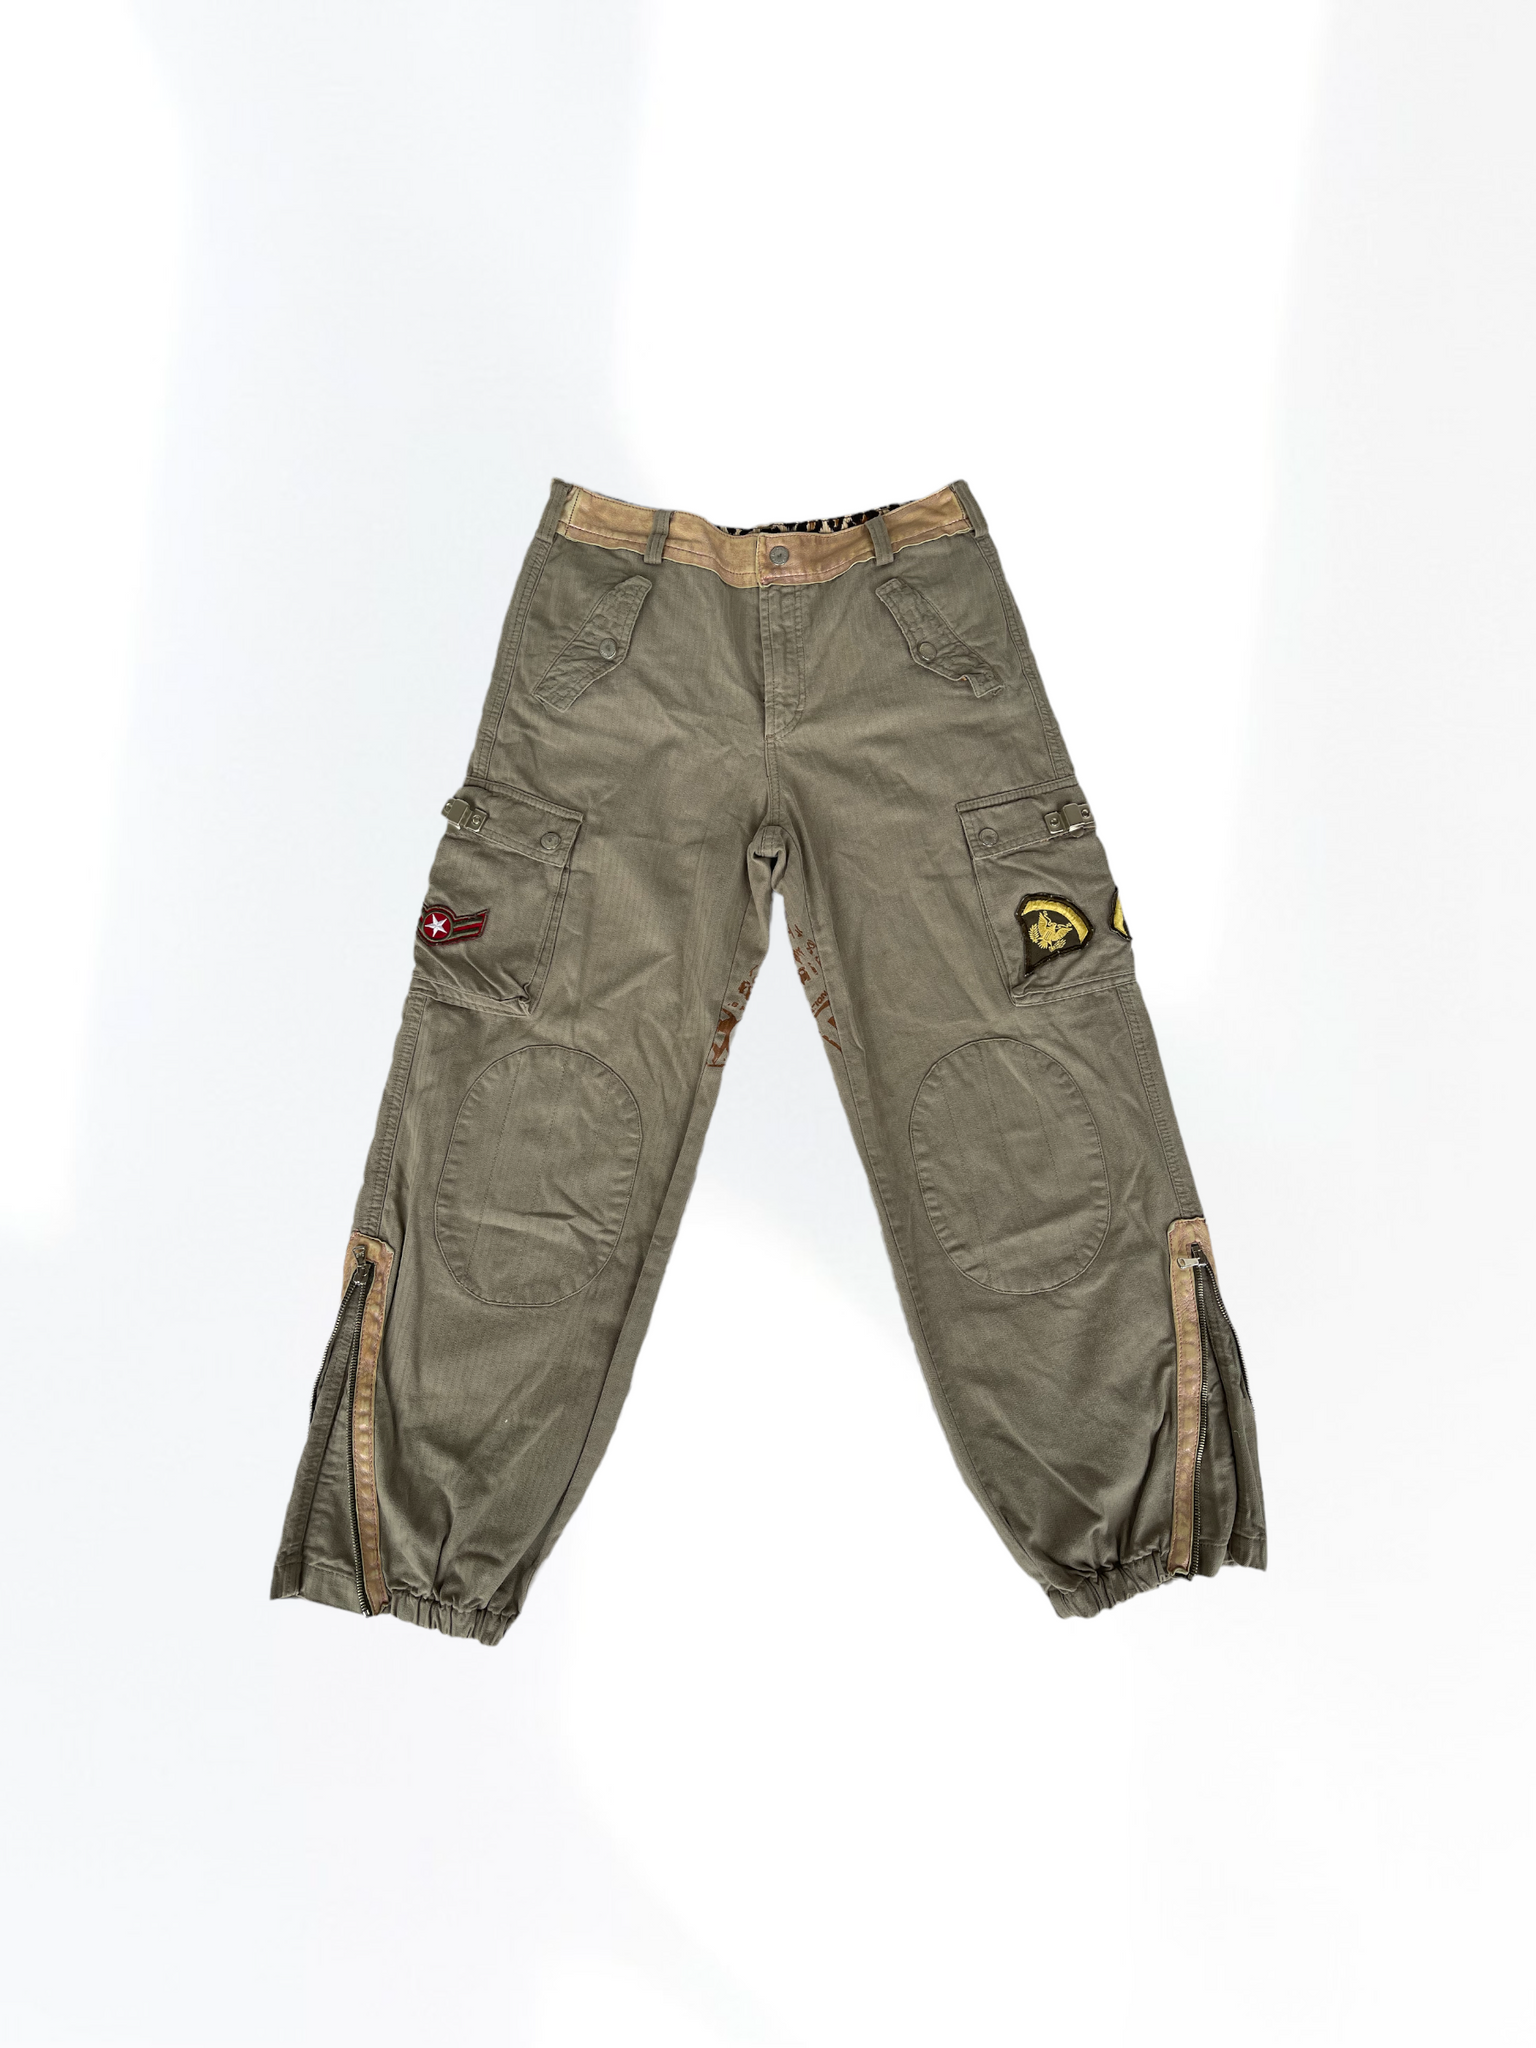 D&G Cargo Pants